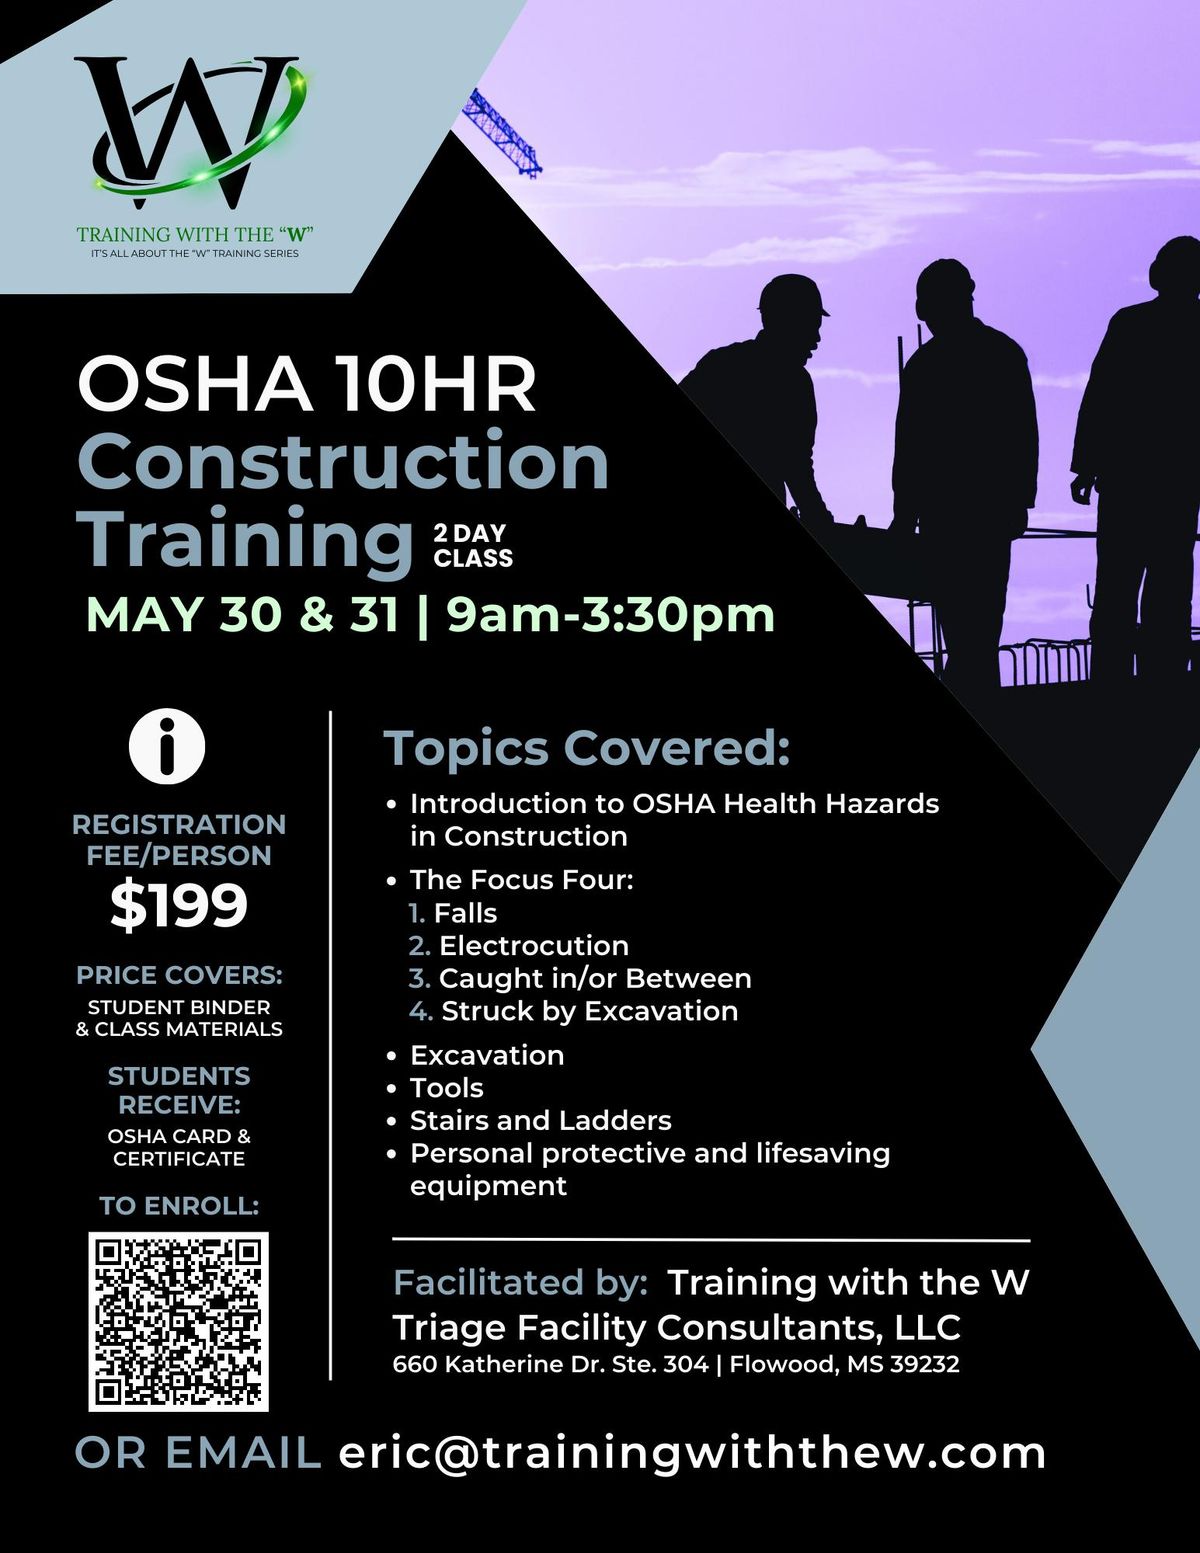 10hr General Training: OSHA